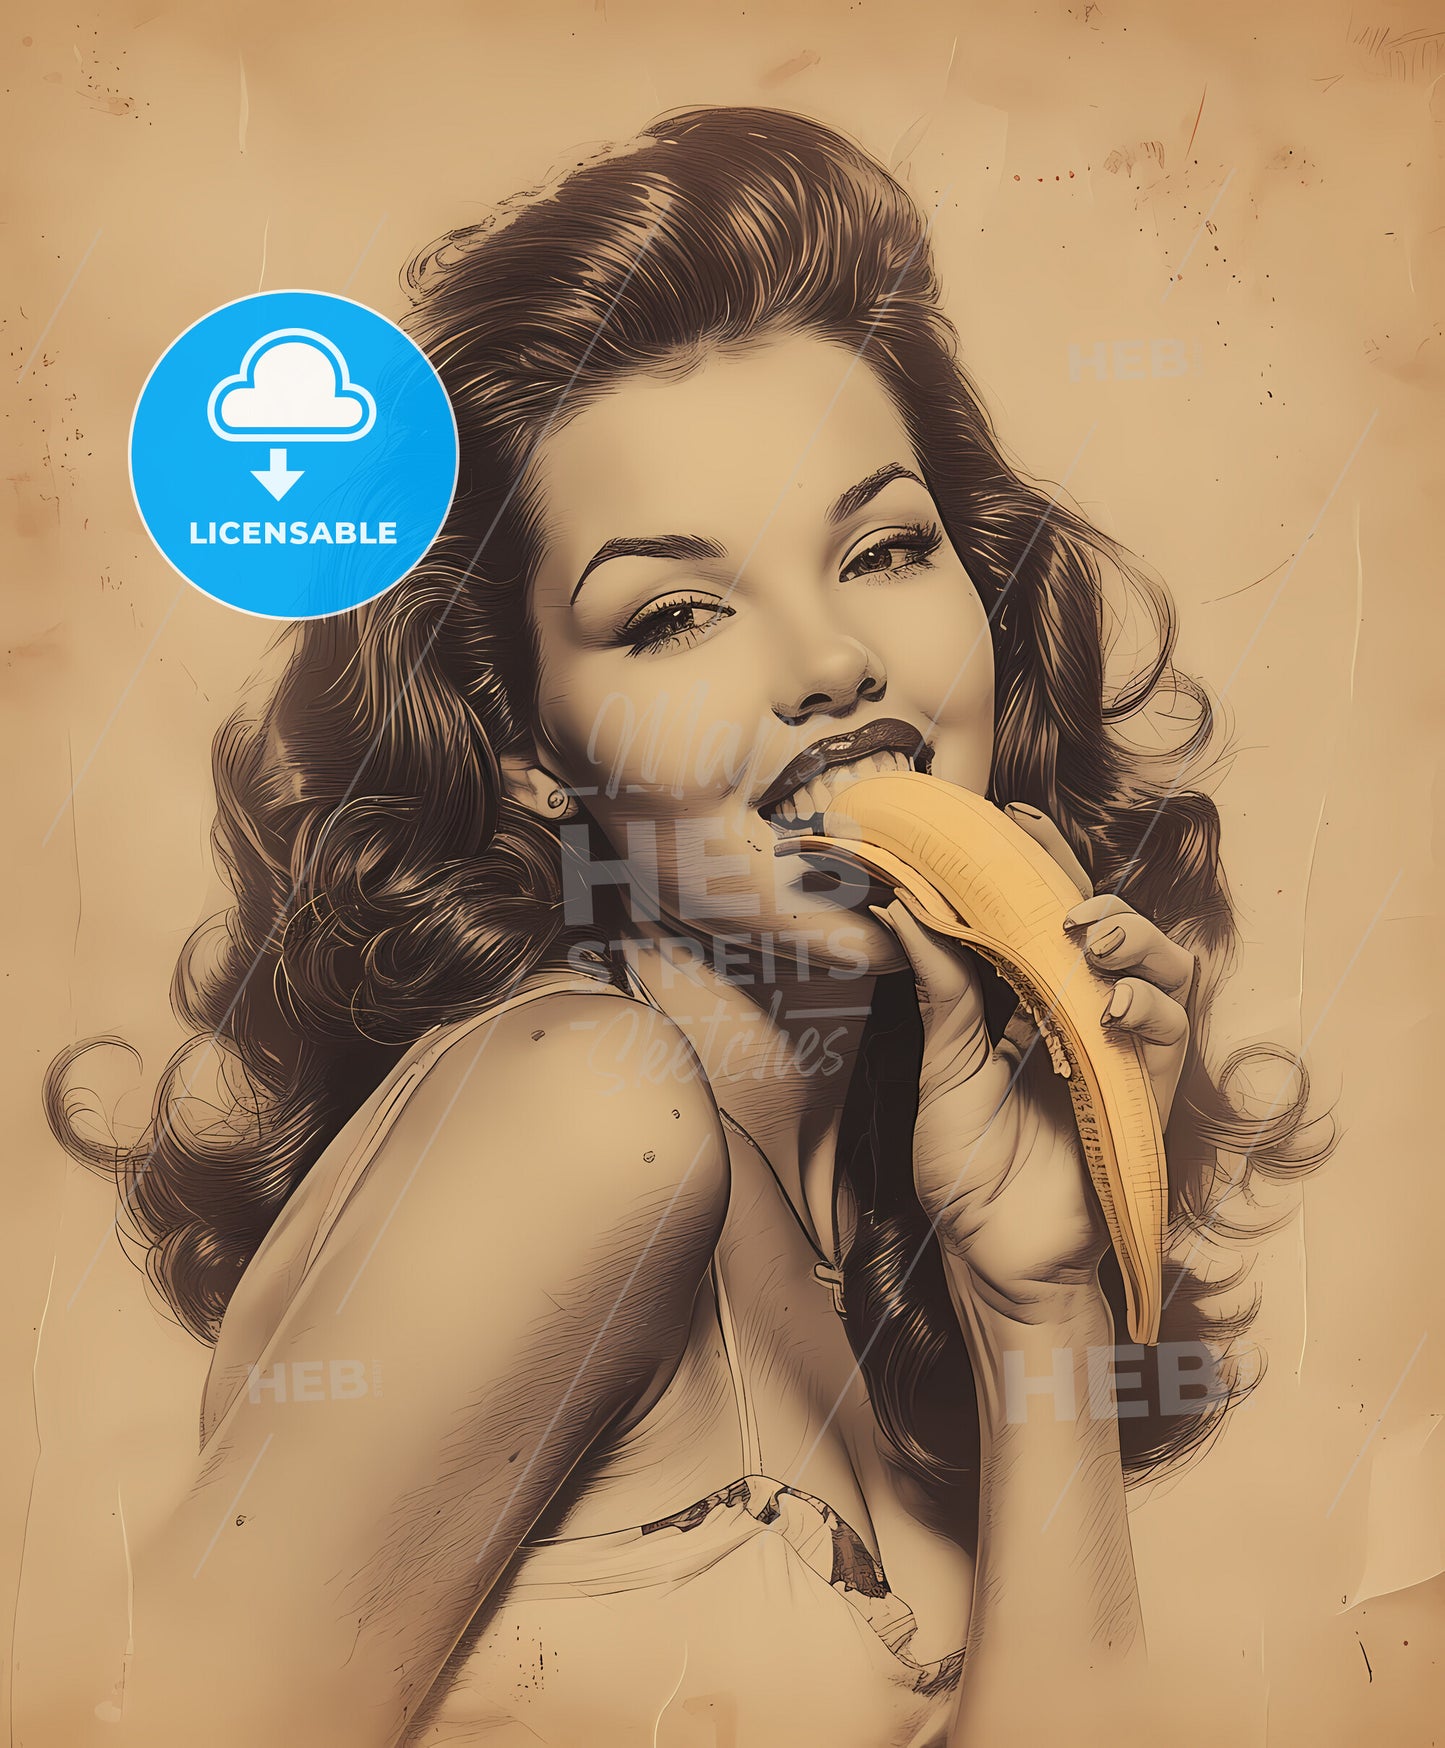 pretty girl, trendy makeup, film noir style, a woman eating a banana